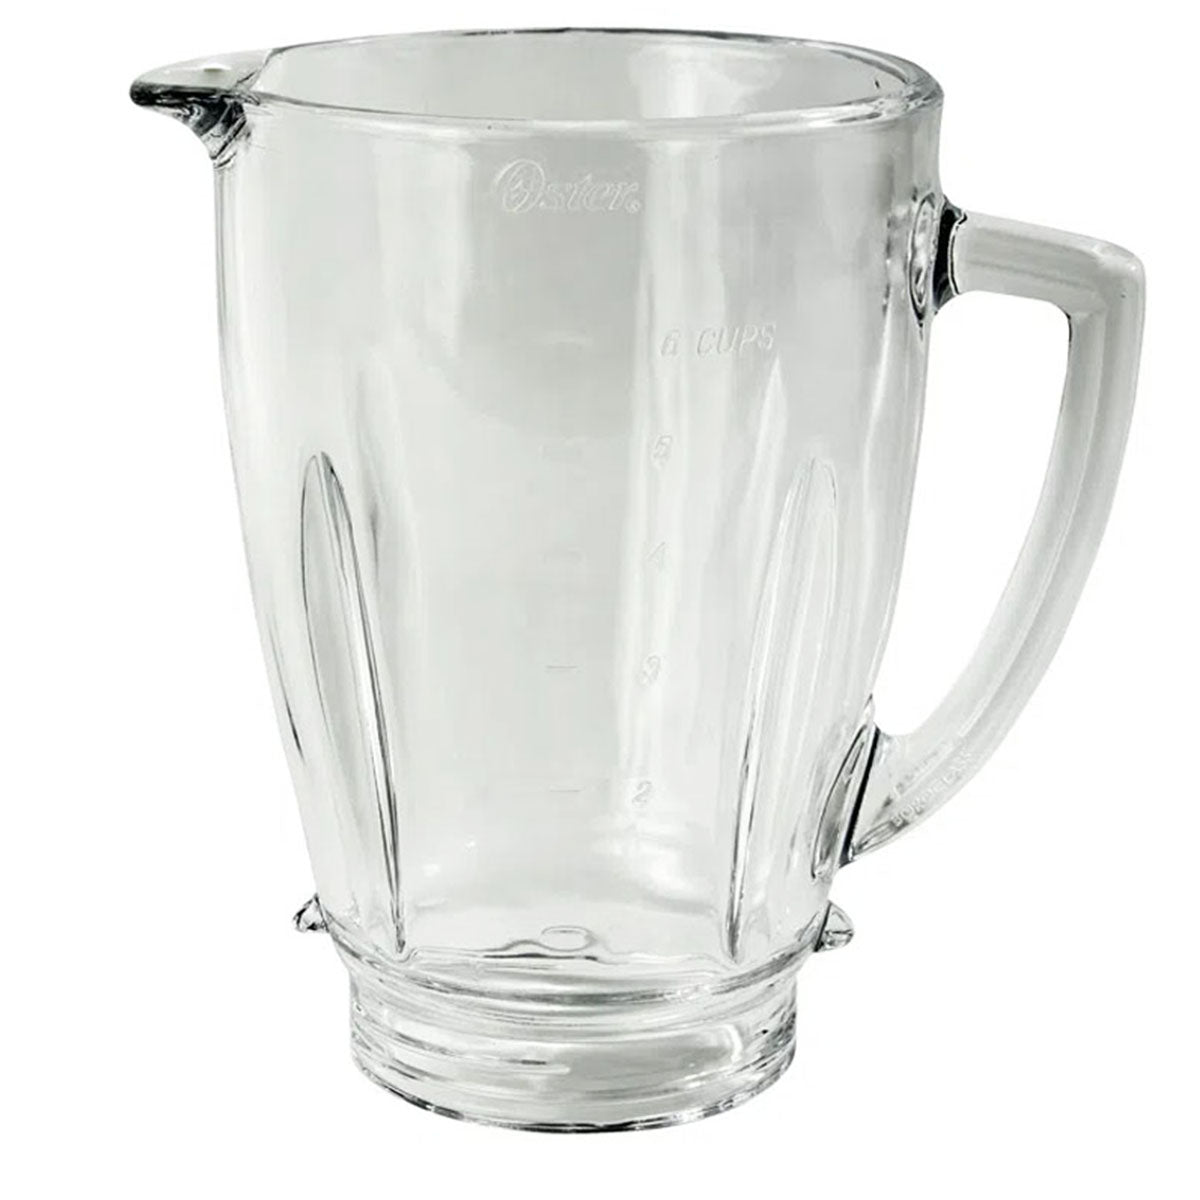 Vaso de vidrio Oster 6 tazas para modelos BLSTPYG